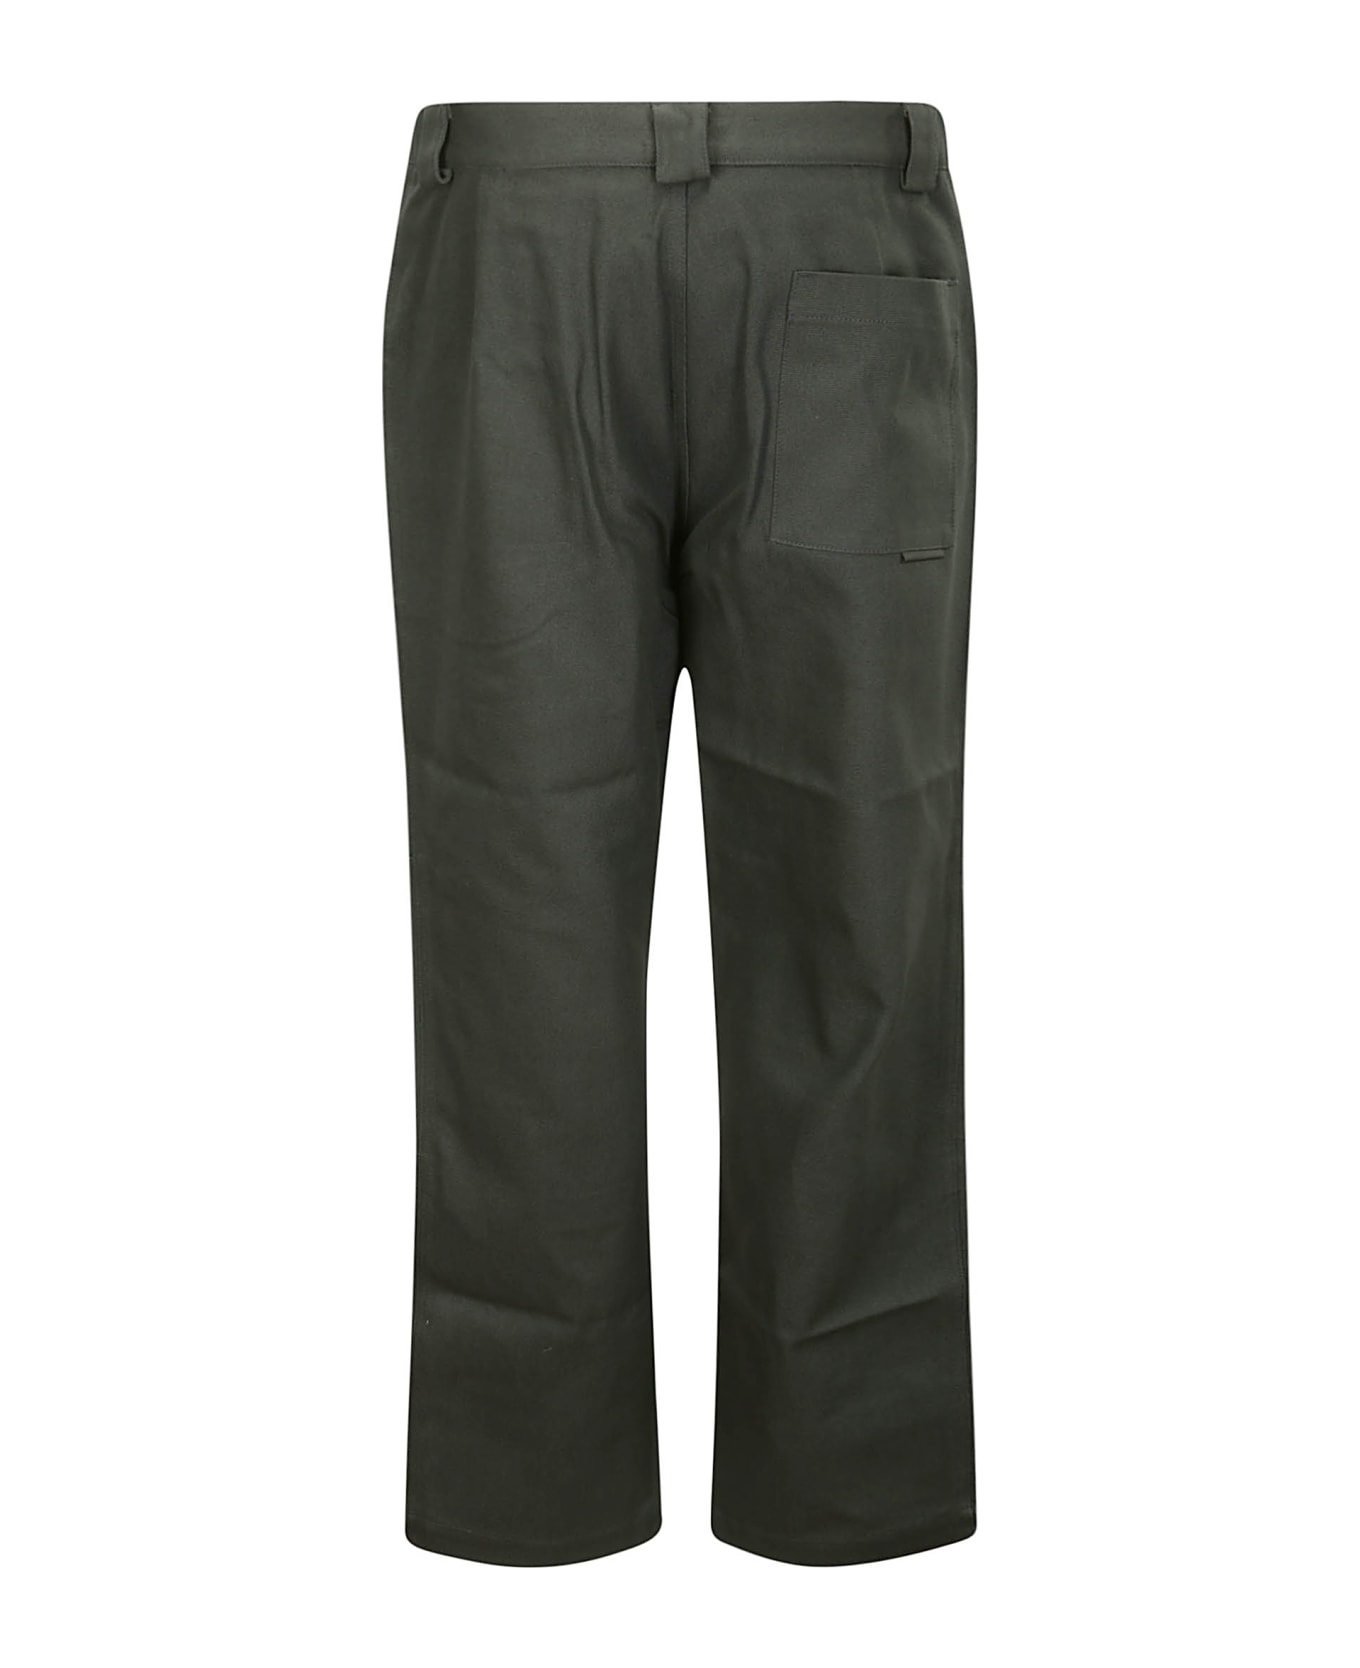 GR10K Replicated Pants - CONVOY GREY